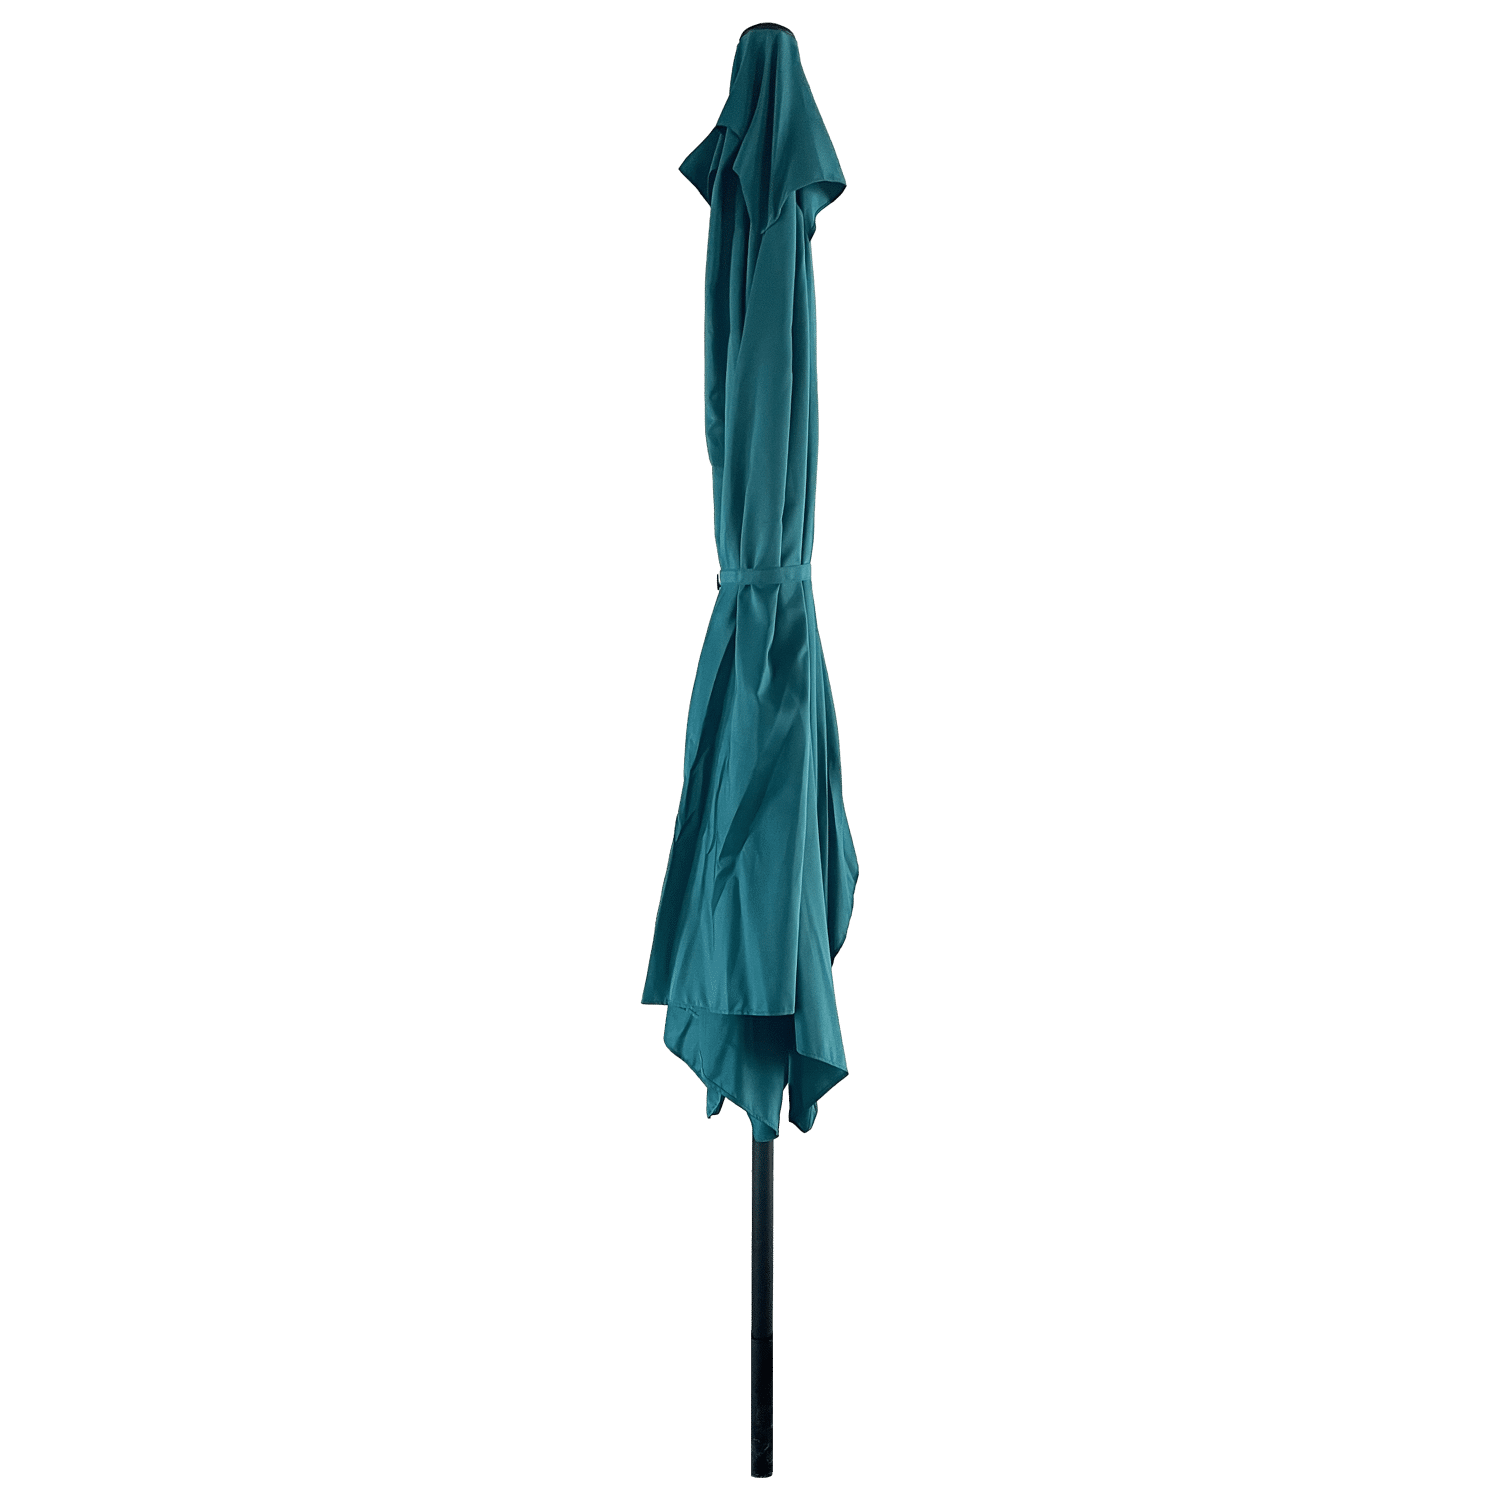 Parasol droit HAPUNA rectangulaire 2x3m bleu